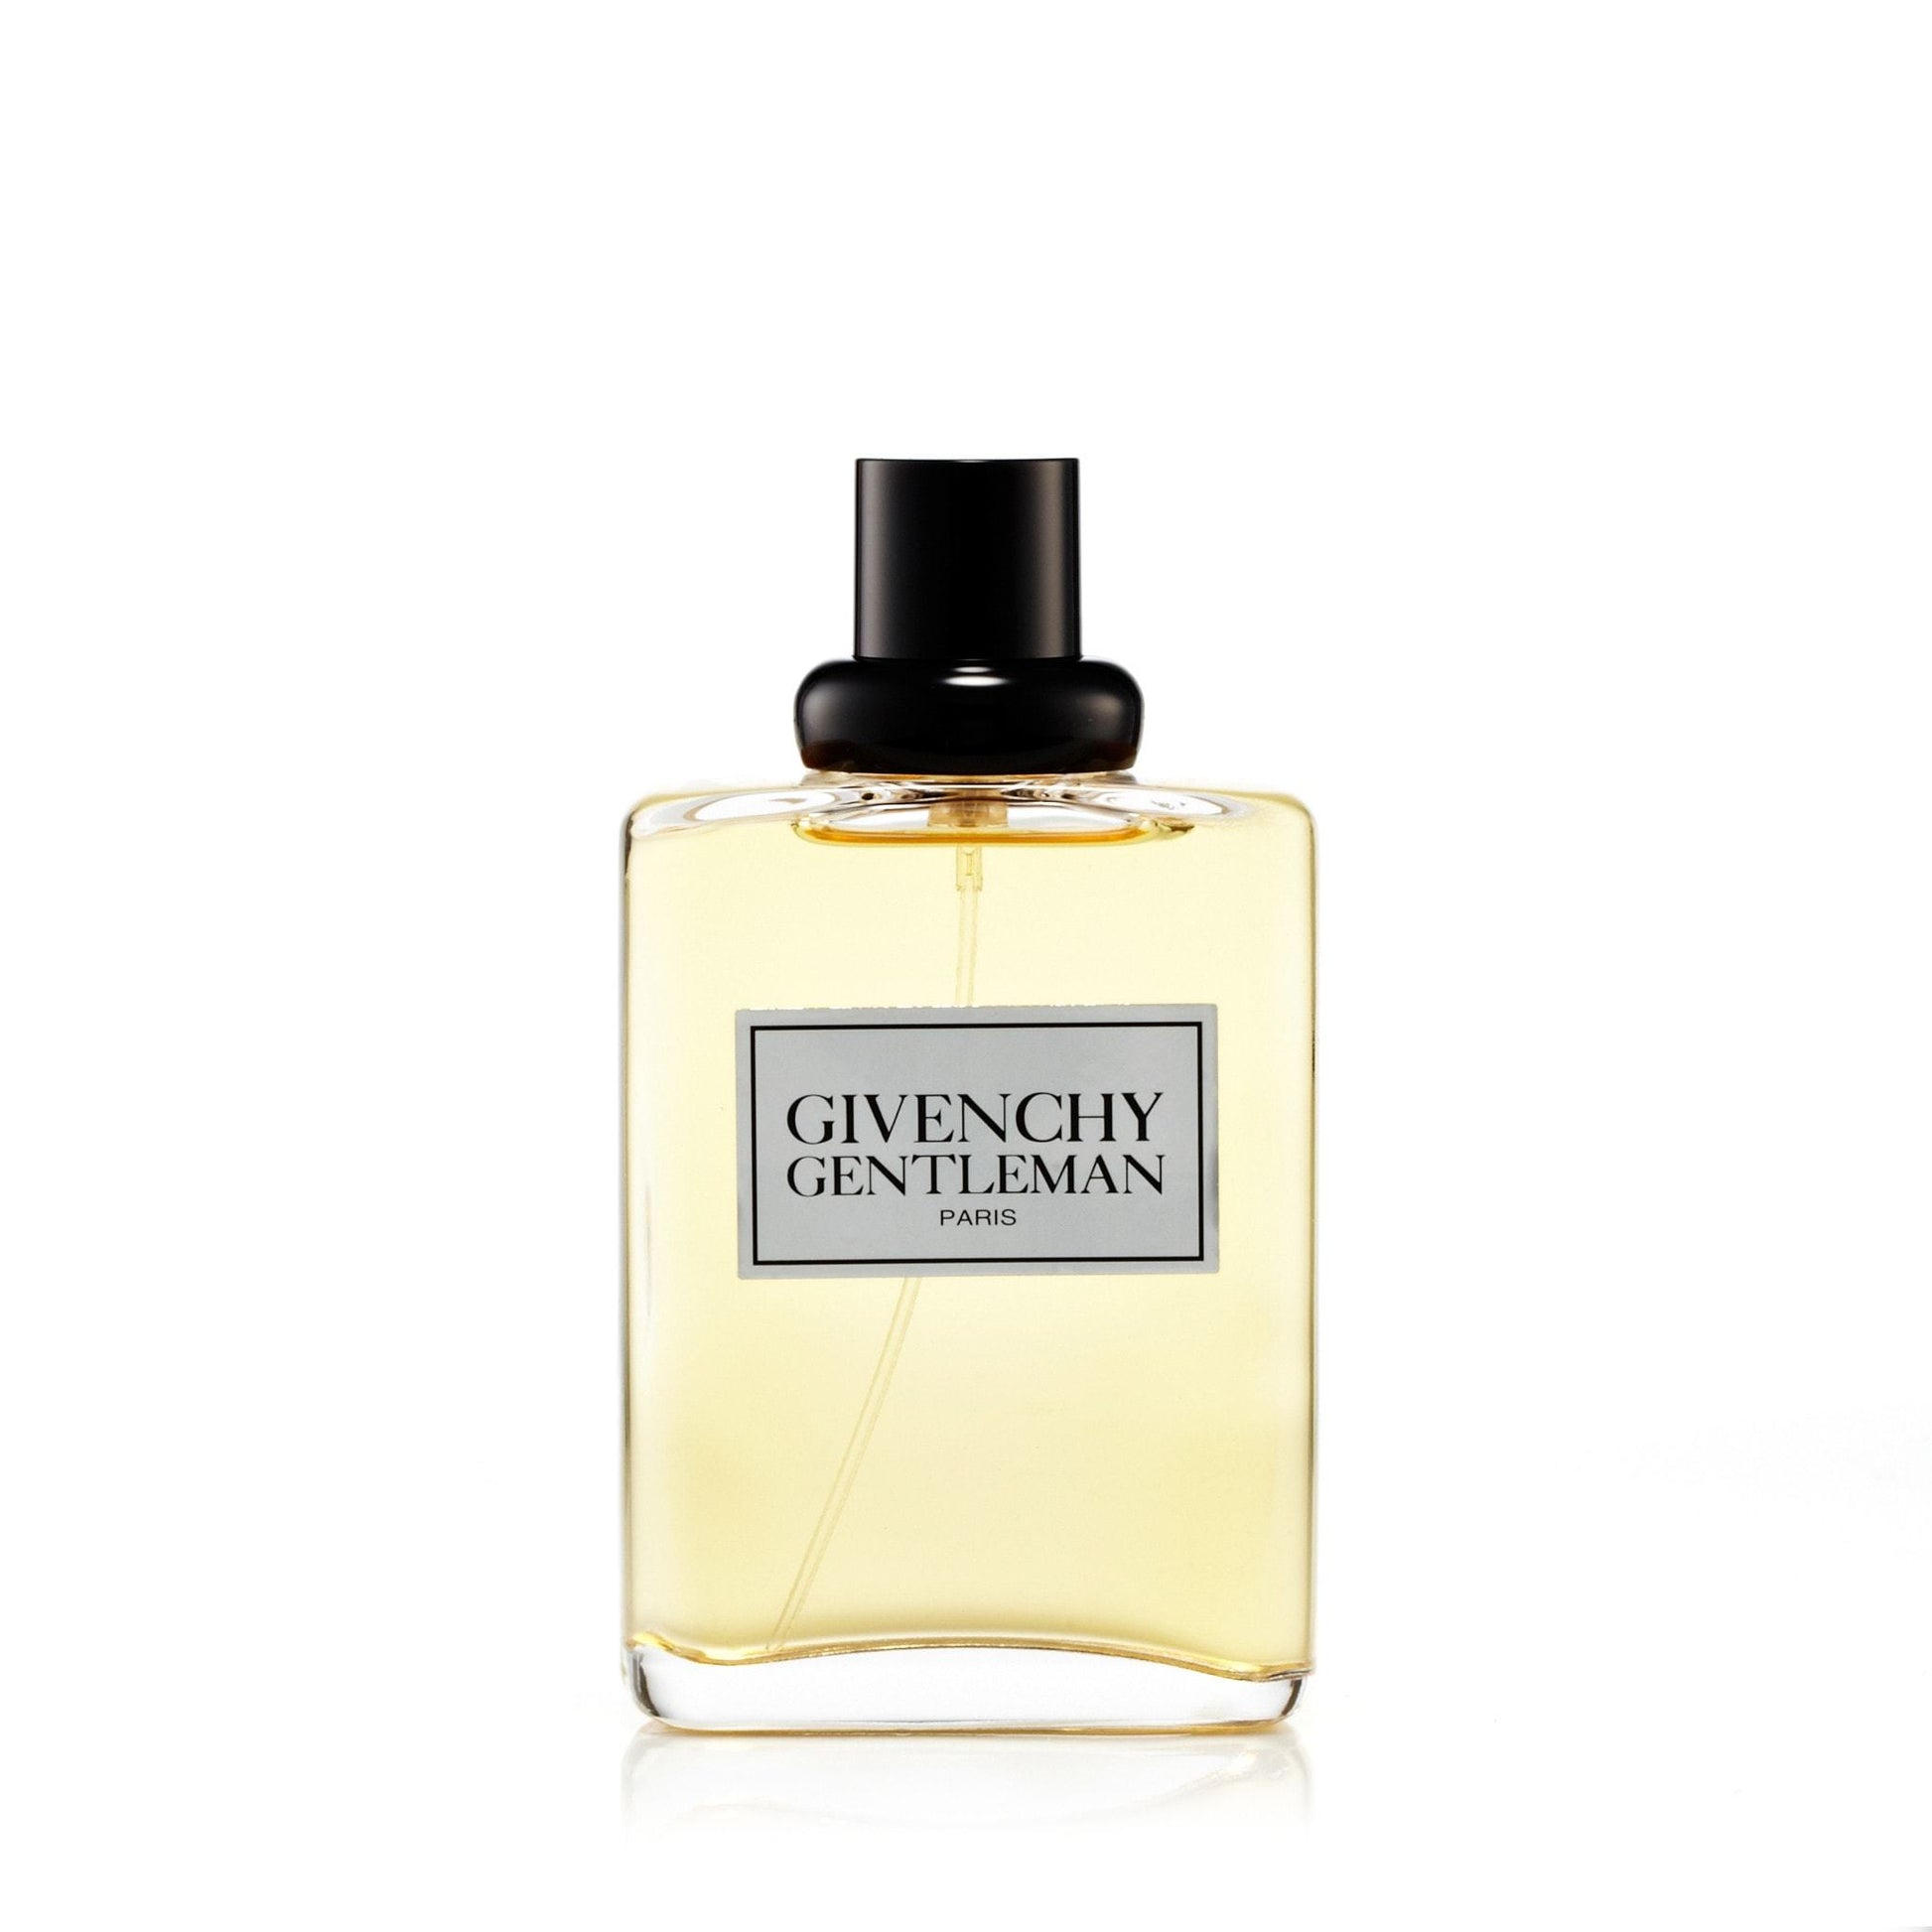 Gentleman Eau de Toilette Spray for Men by Givenchy, Product image 1